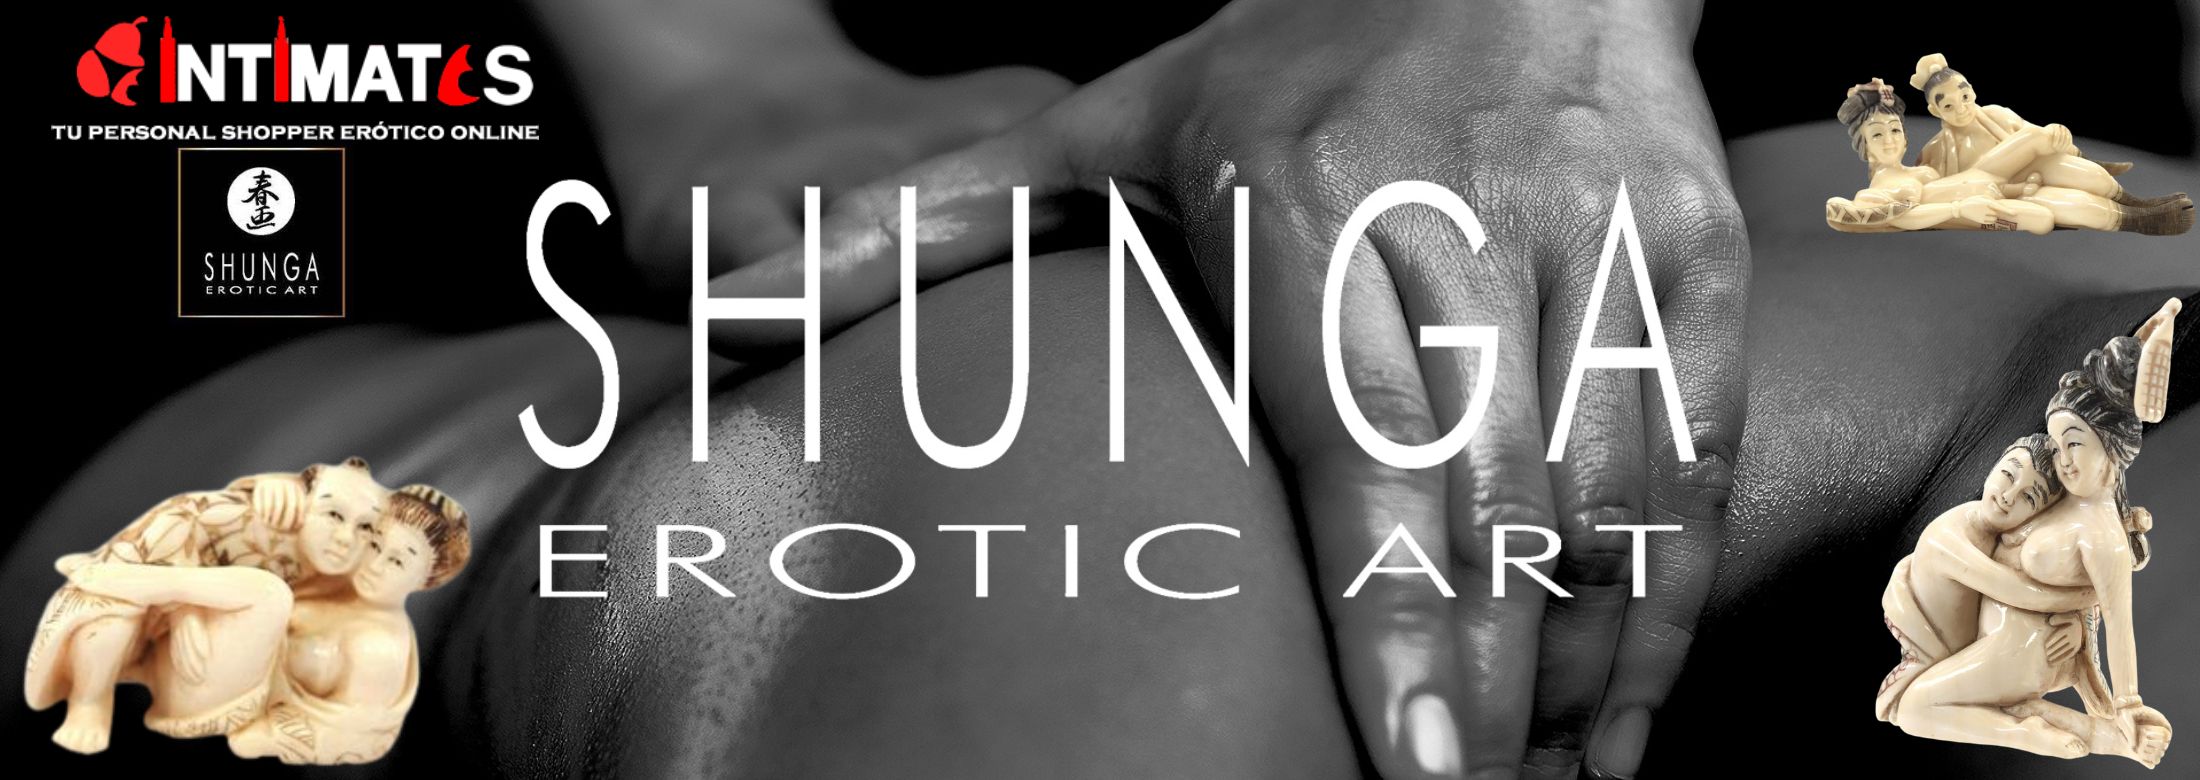 Shunga Erotic Art Warmanig Oil's , que puedes adquirir en intimates.es "Tu Personal Shopper Erótico Online" 